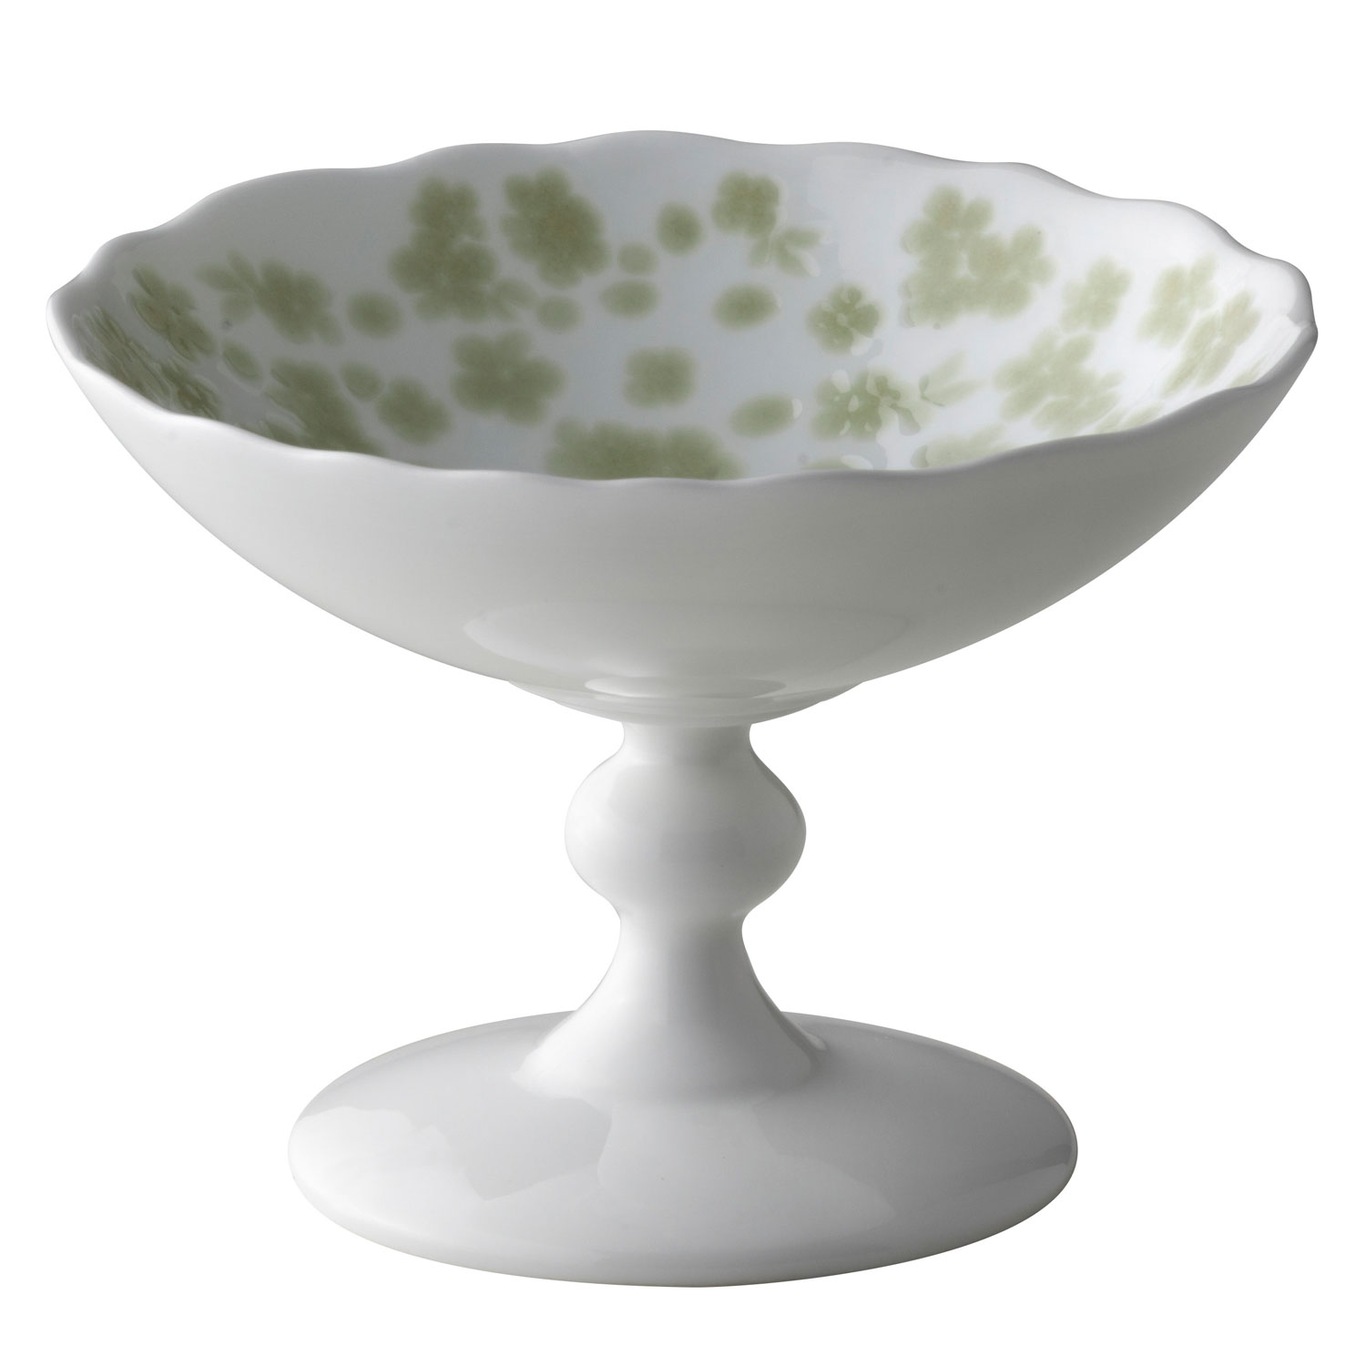 Slåpeblom Bowl With Foot 12 cm, Green